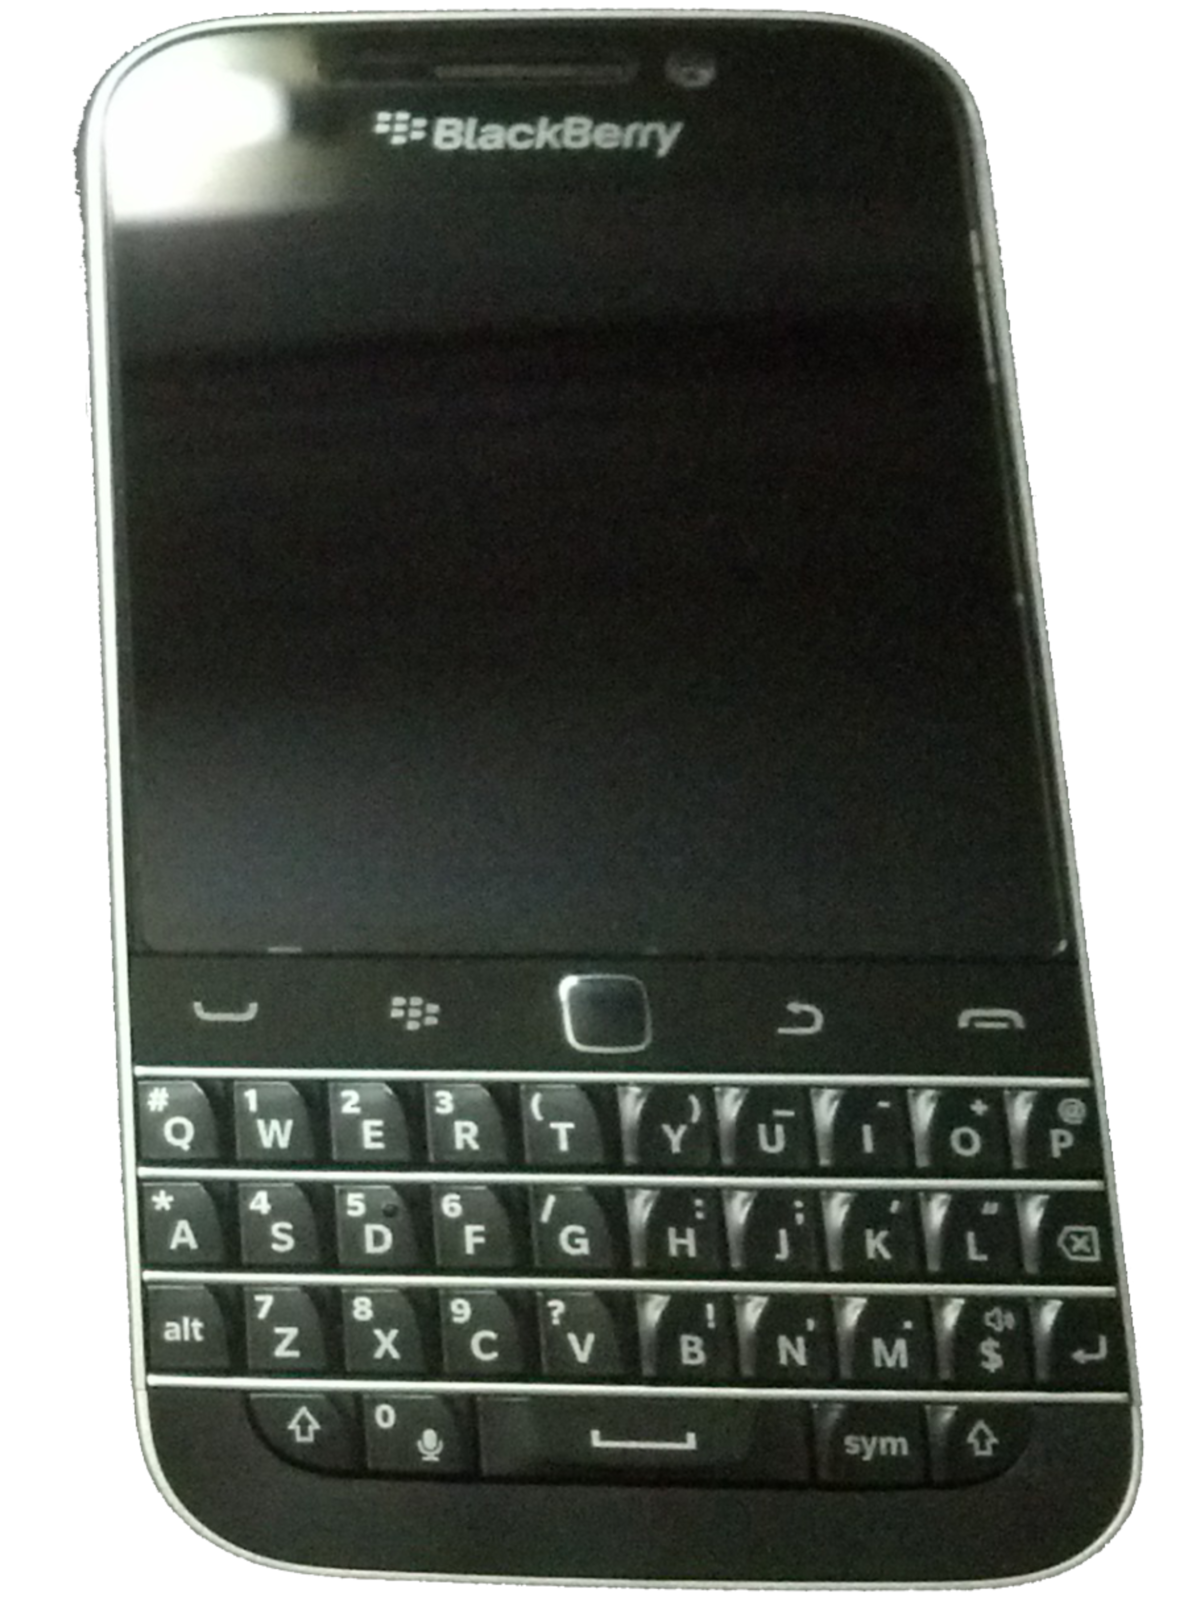 BlackBerry Classic - Wikipedia